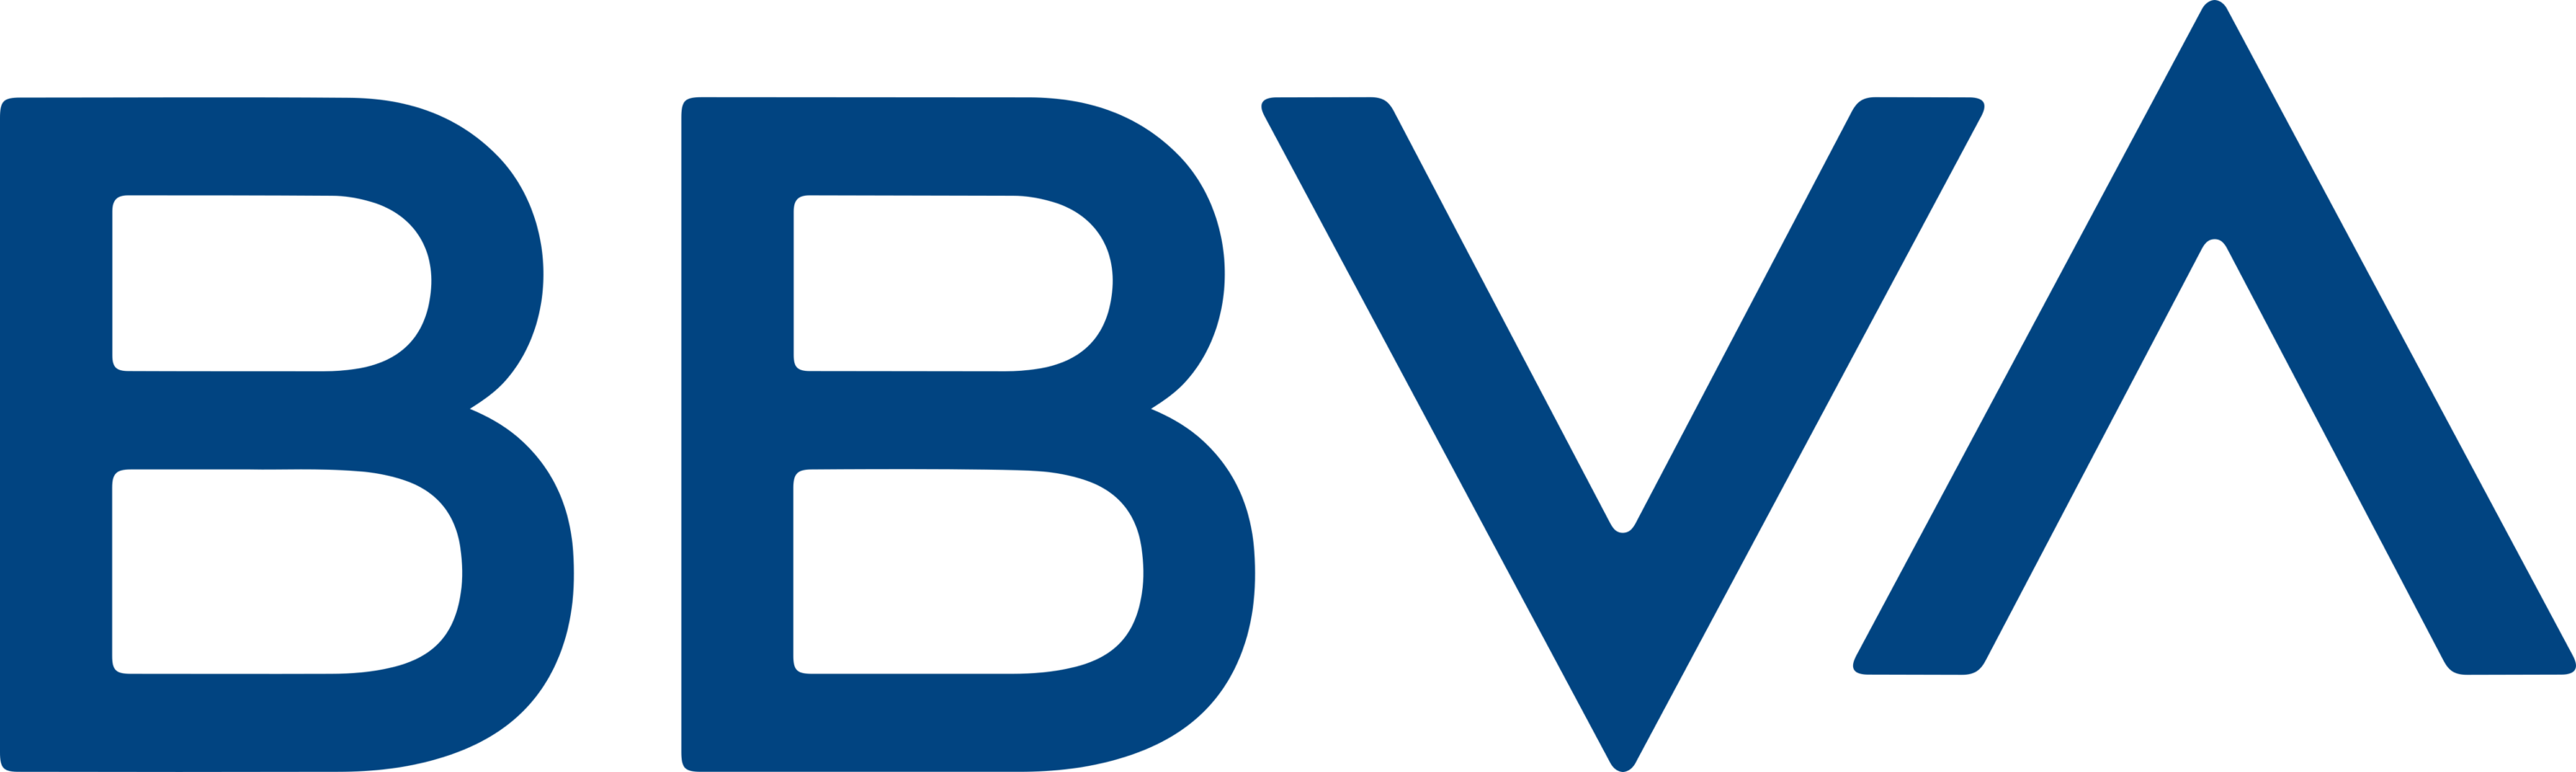 BBVA Logo 2019